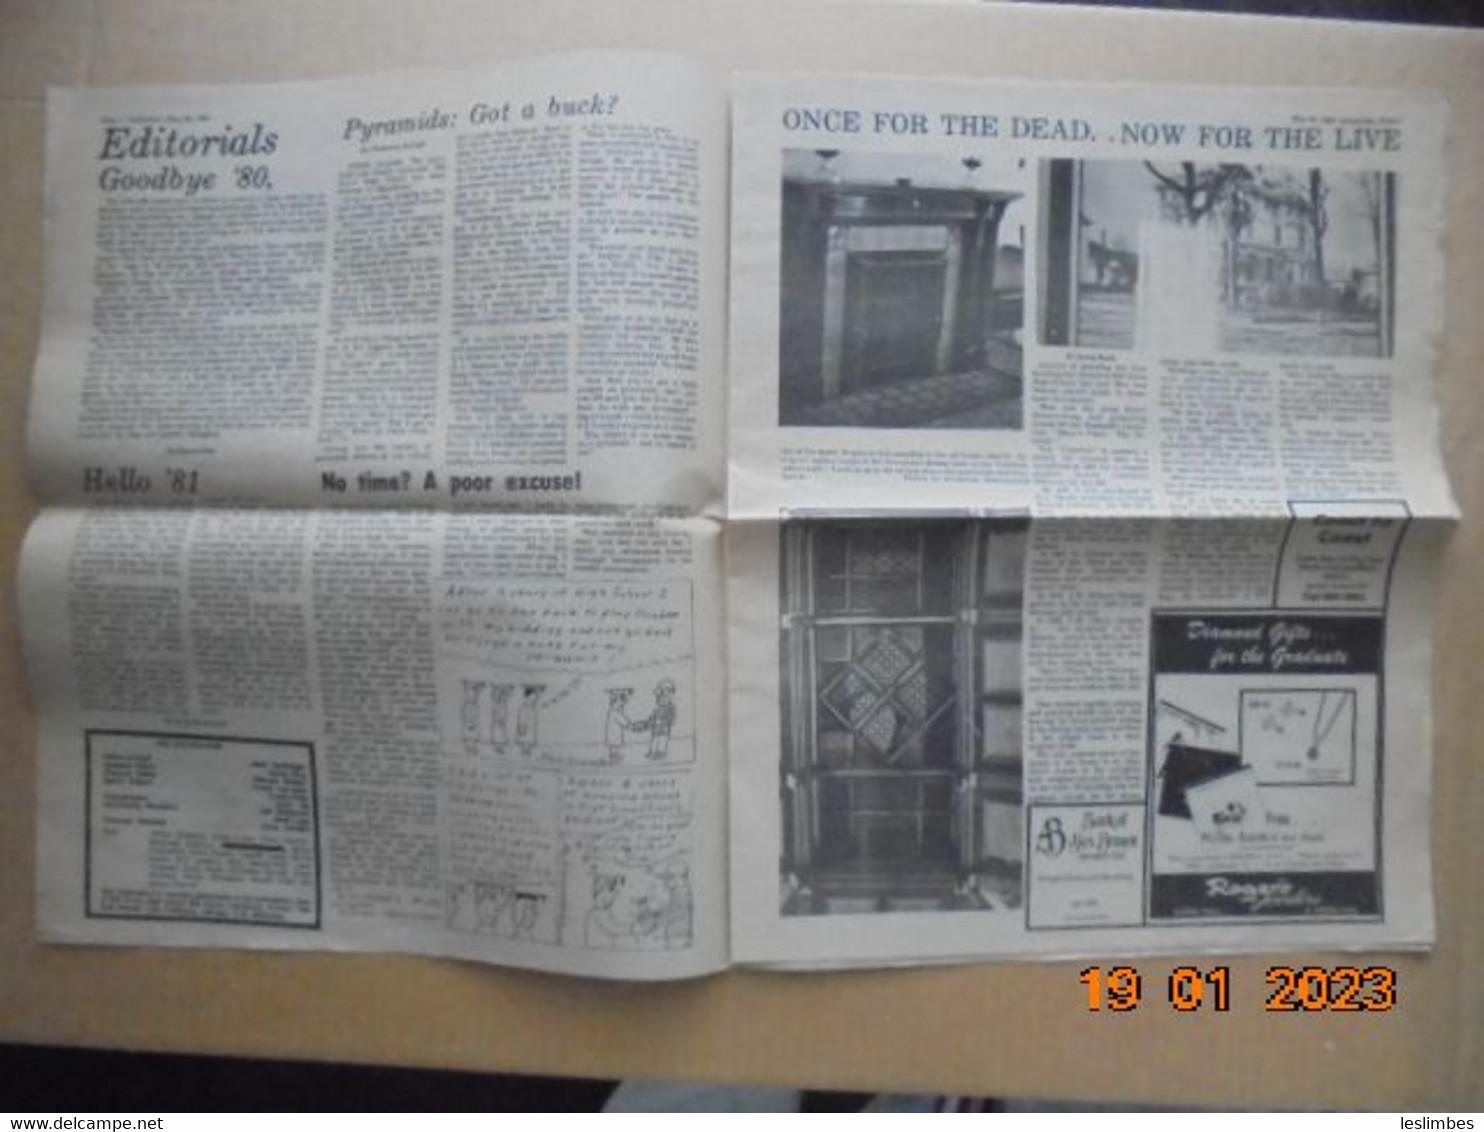 Antlerette (Elk Grove High School, California) Volume 54, Number 10 - May 29, 1980 - News/ Current Affairs